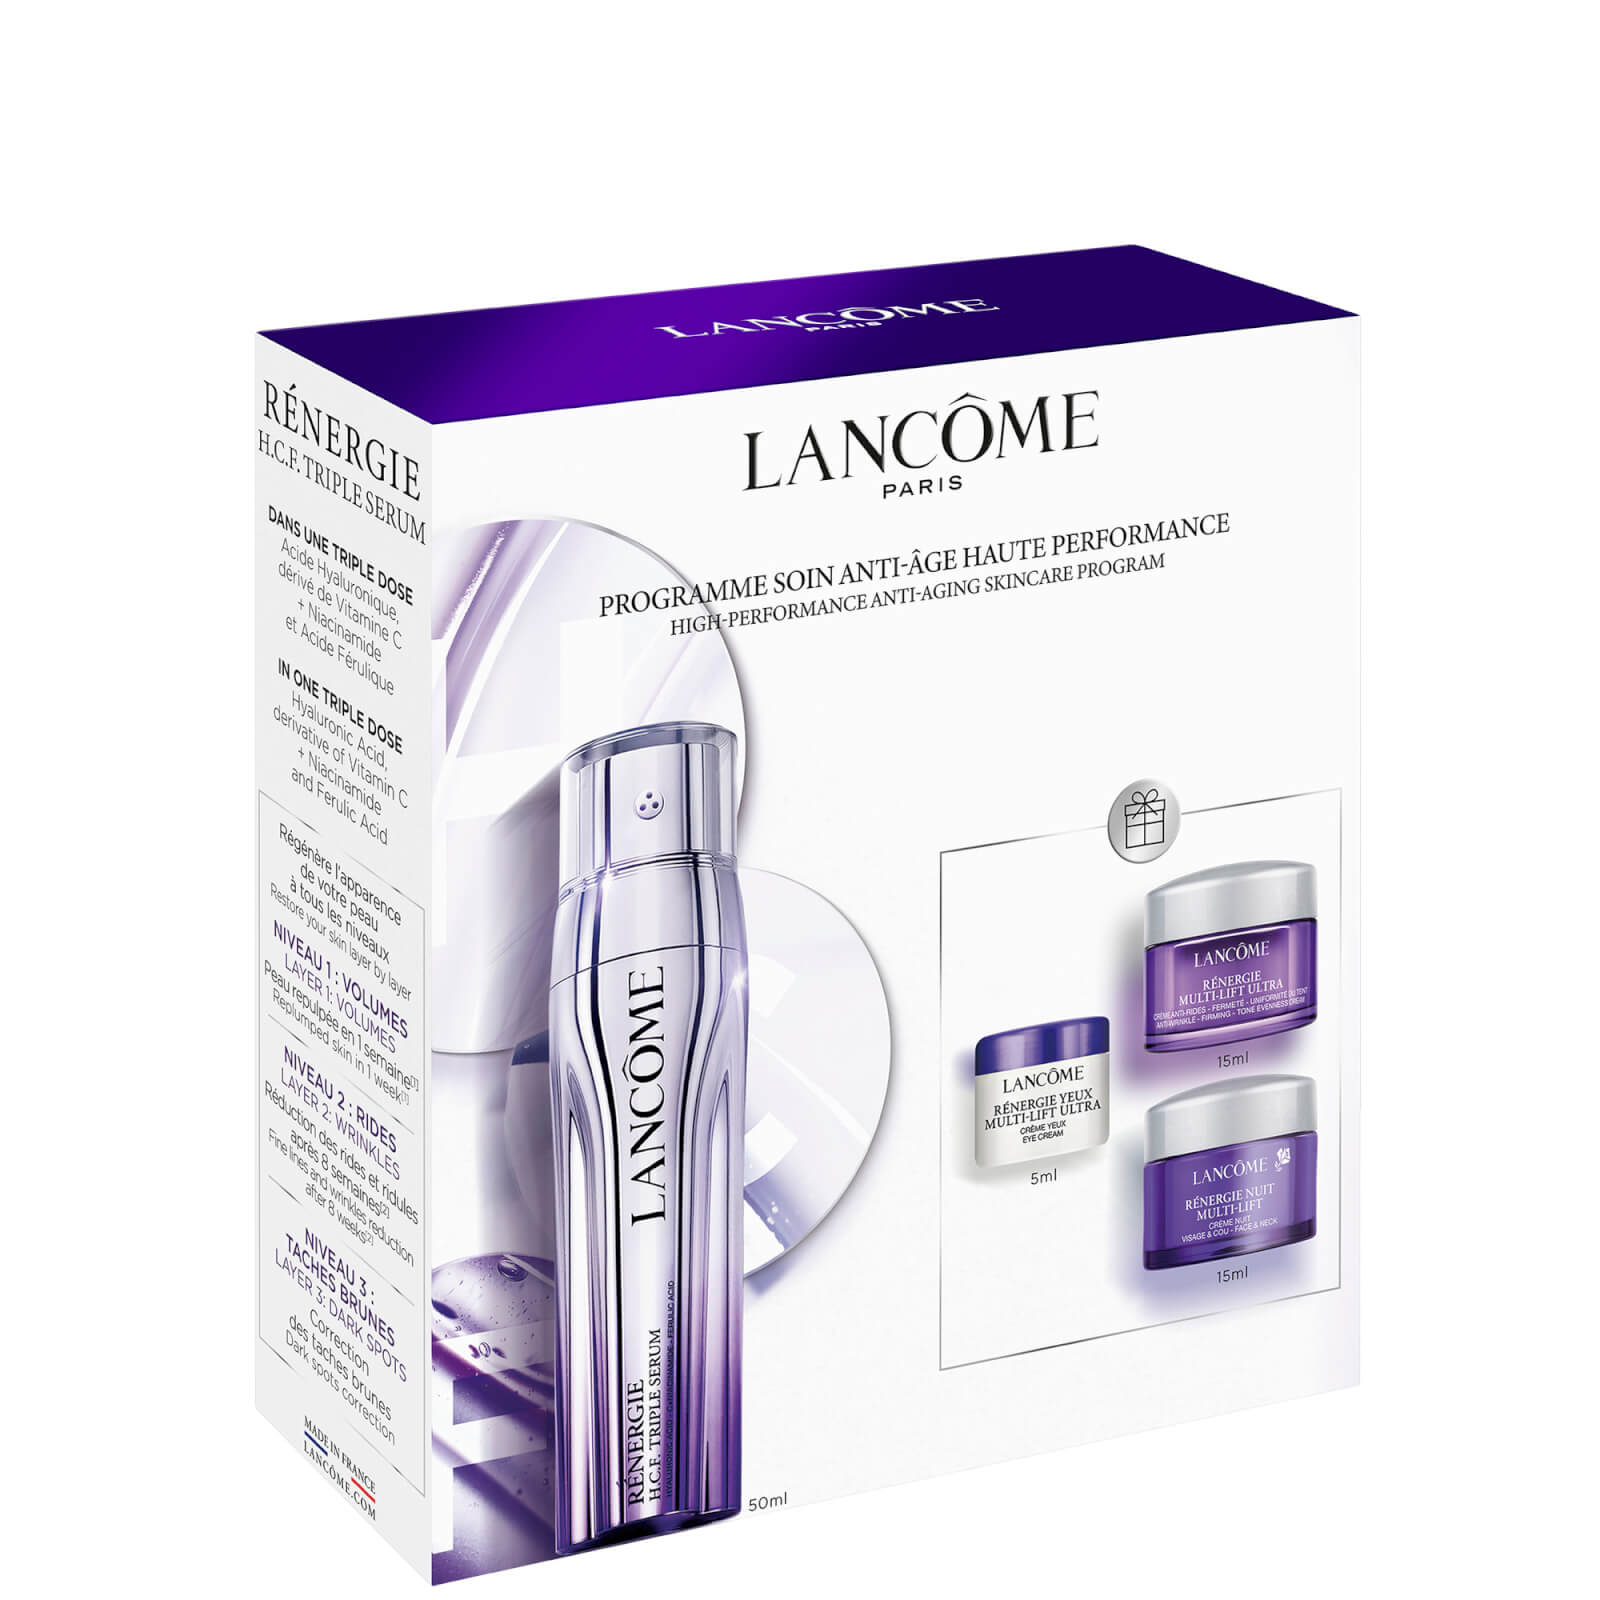 Lancome Renergie Triple Serum 50ml Skincare Gift Set